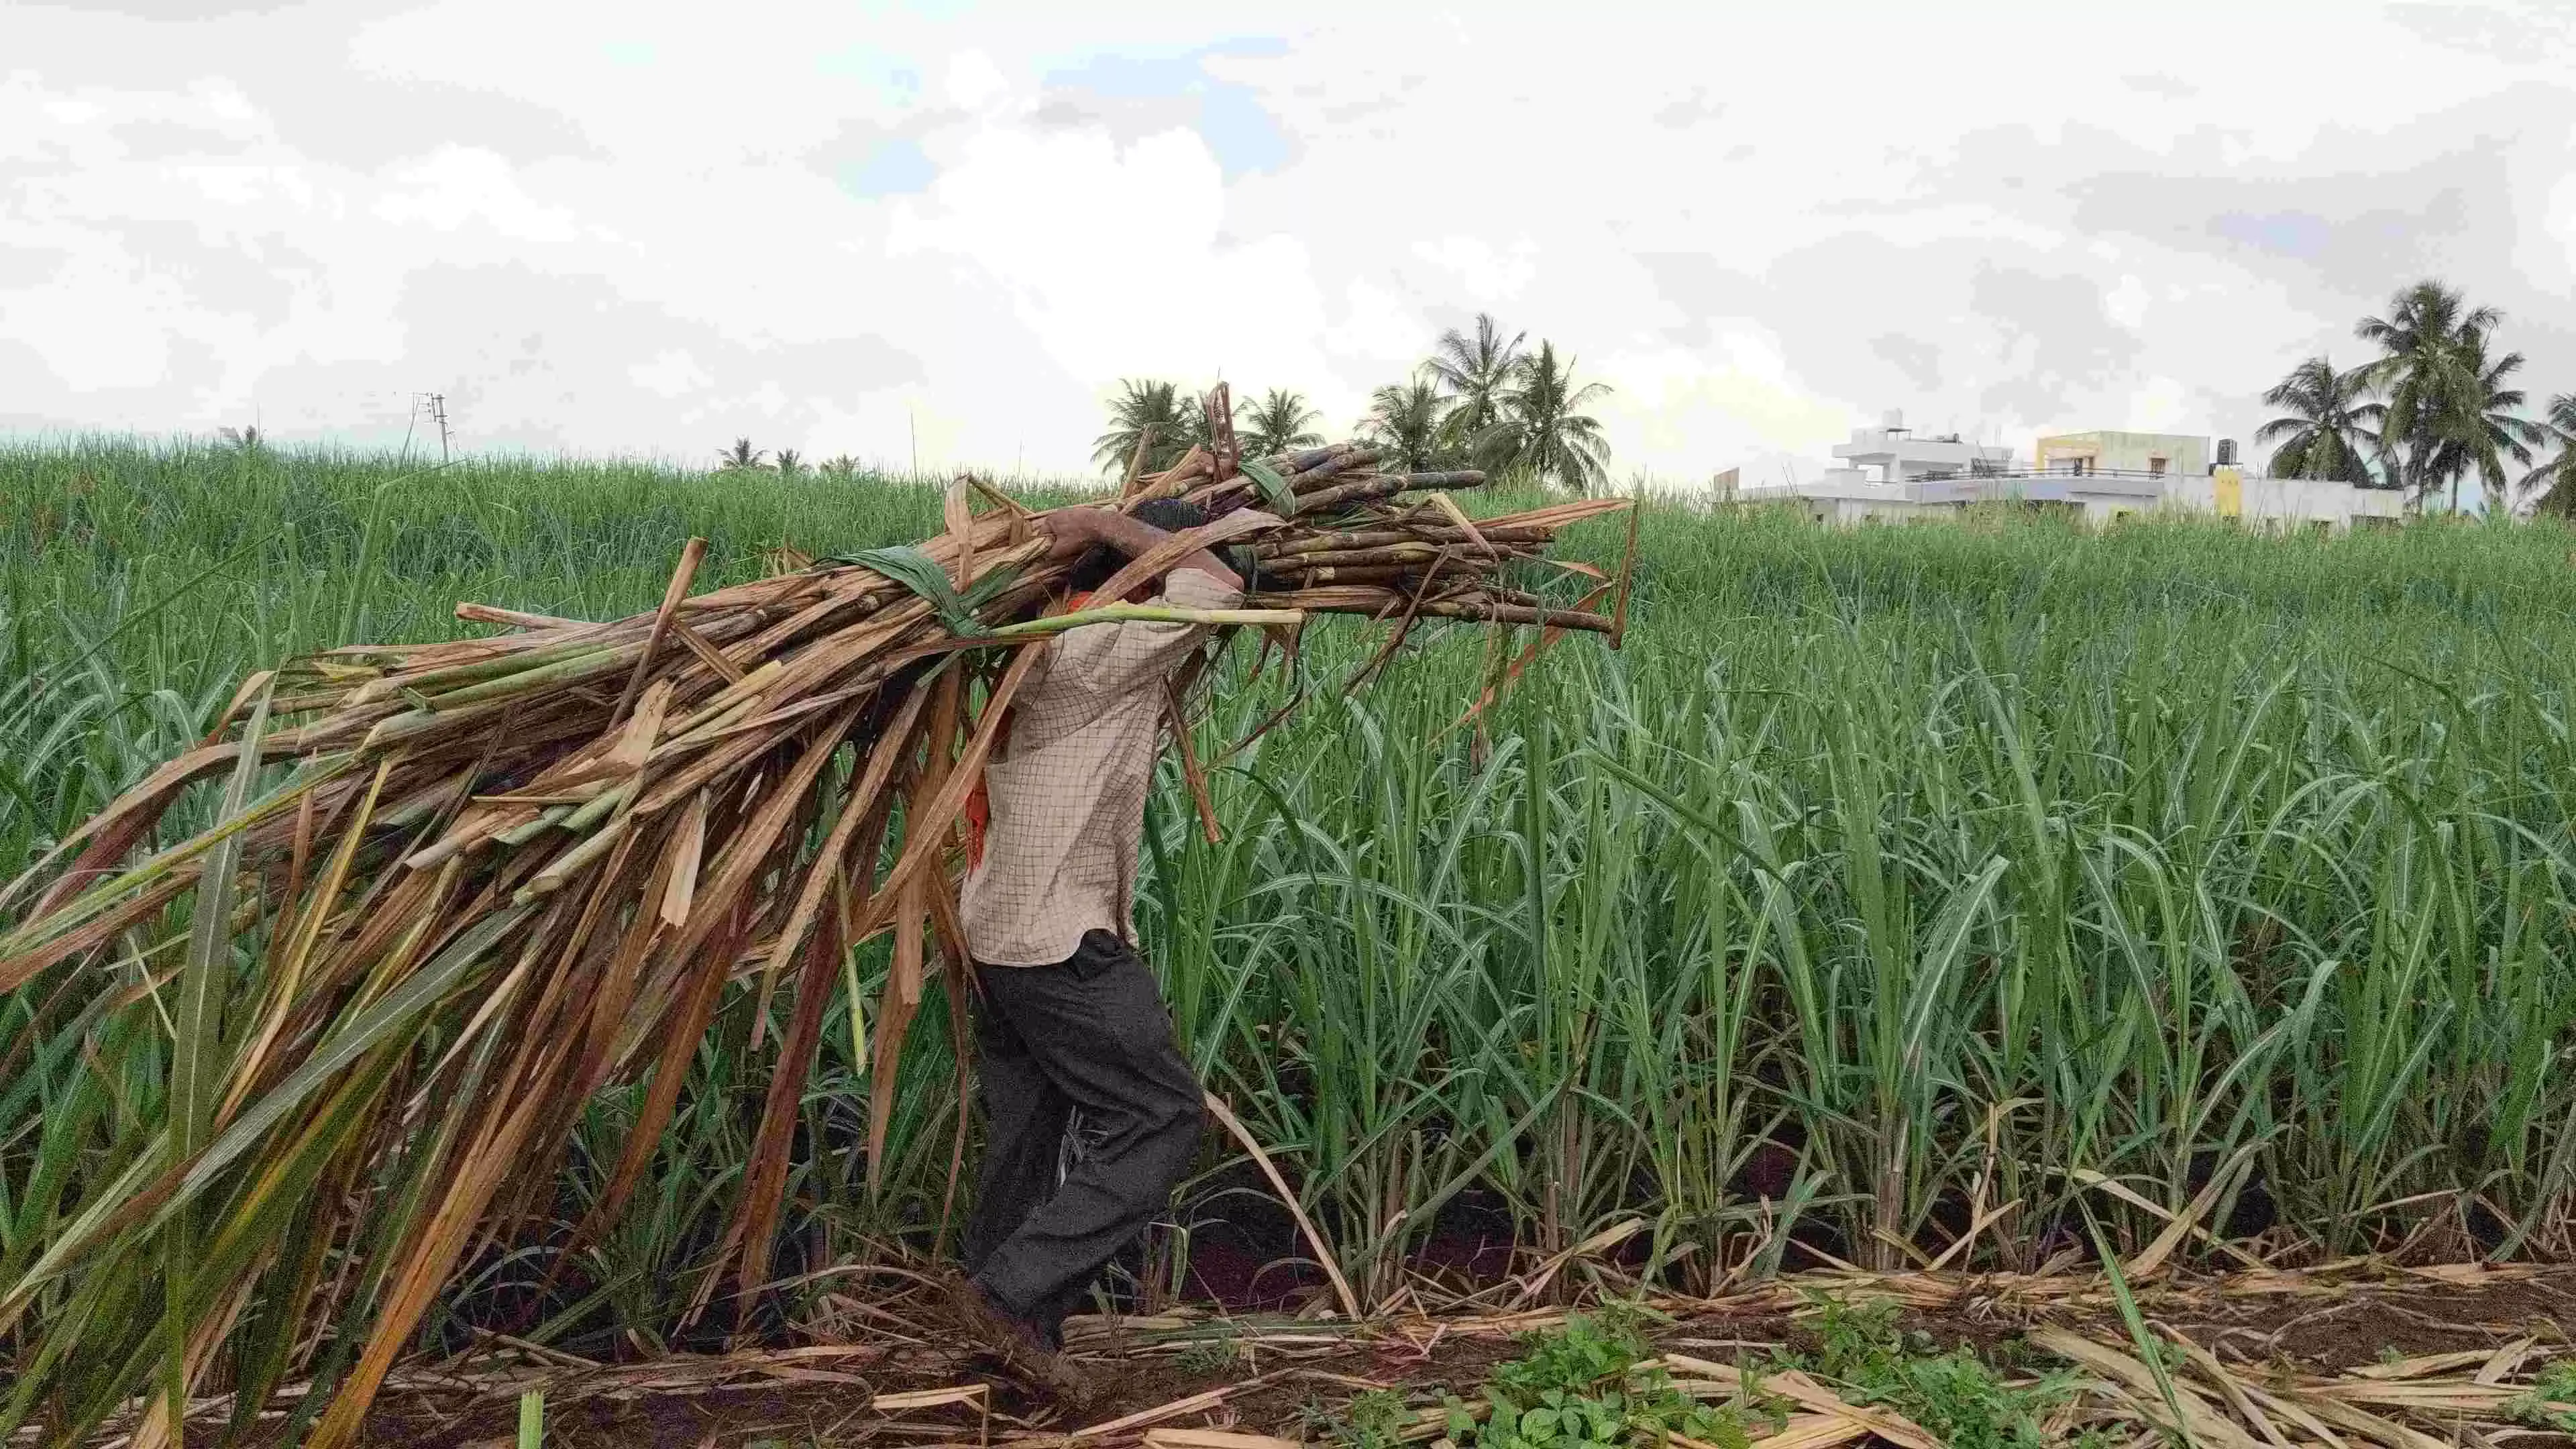 Meet the farmer who earns Rs 50-60 lakh from sugarcane, has 7 lakh followers on social media